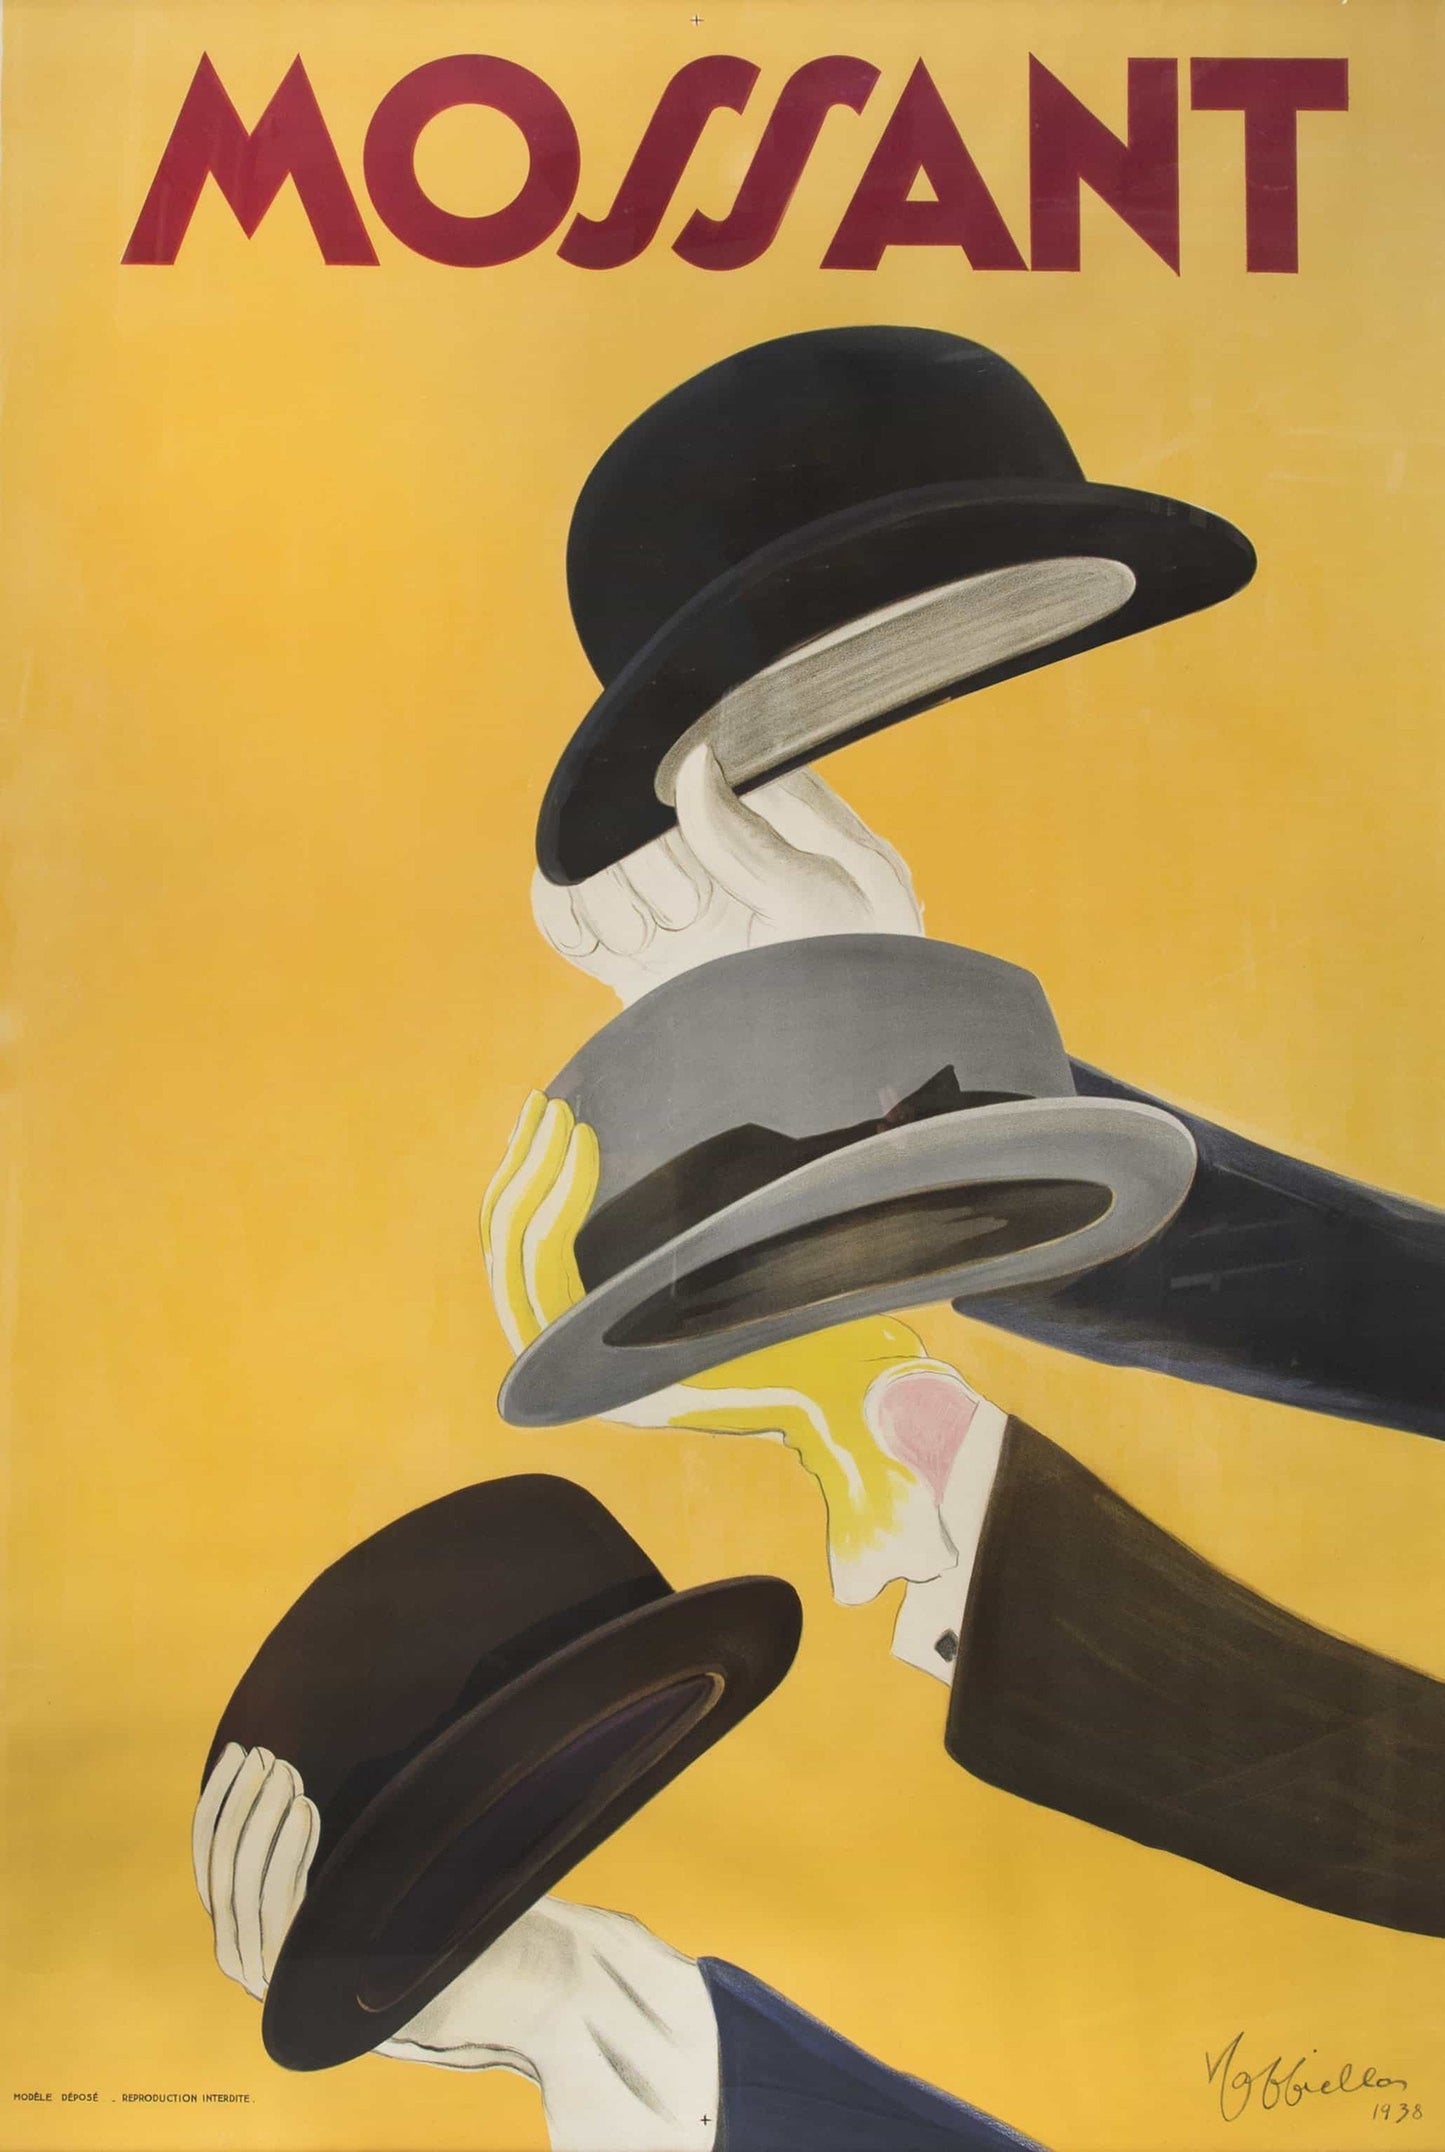 Mossant Hats Poster (1930s) | Vintage poster art prints | Leonetto Cappiello Posters, Prints, & Visual Artwork The Trumpet Shop   